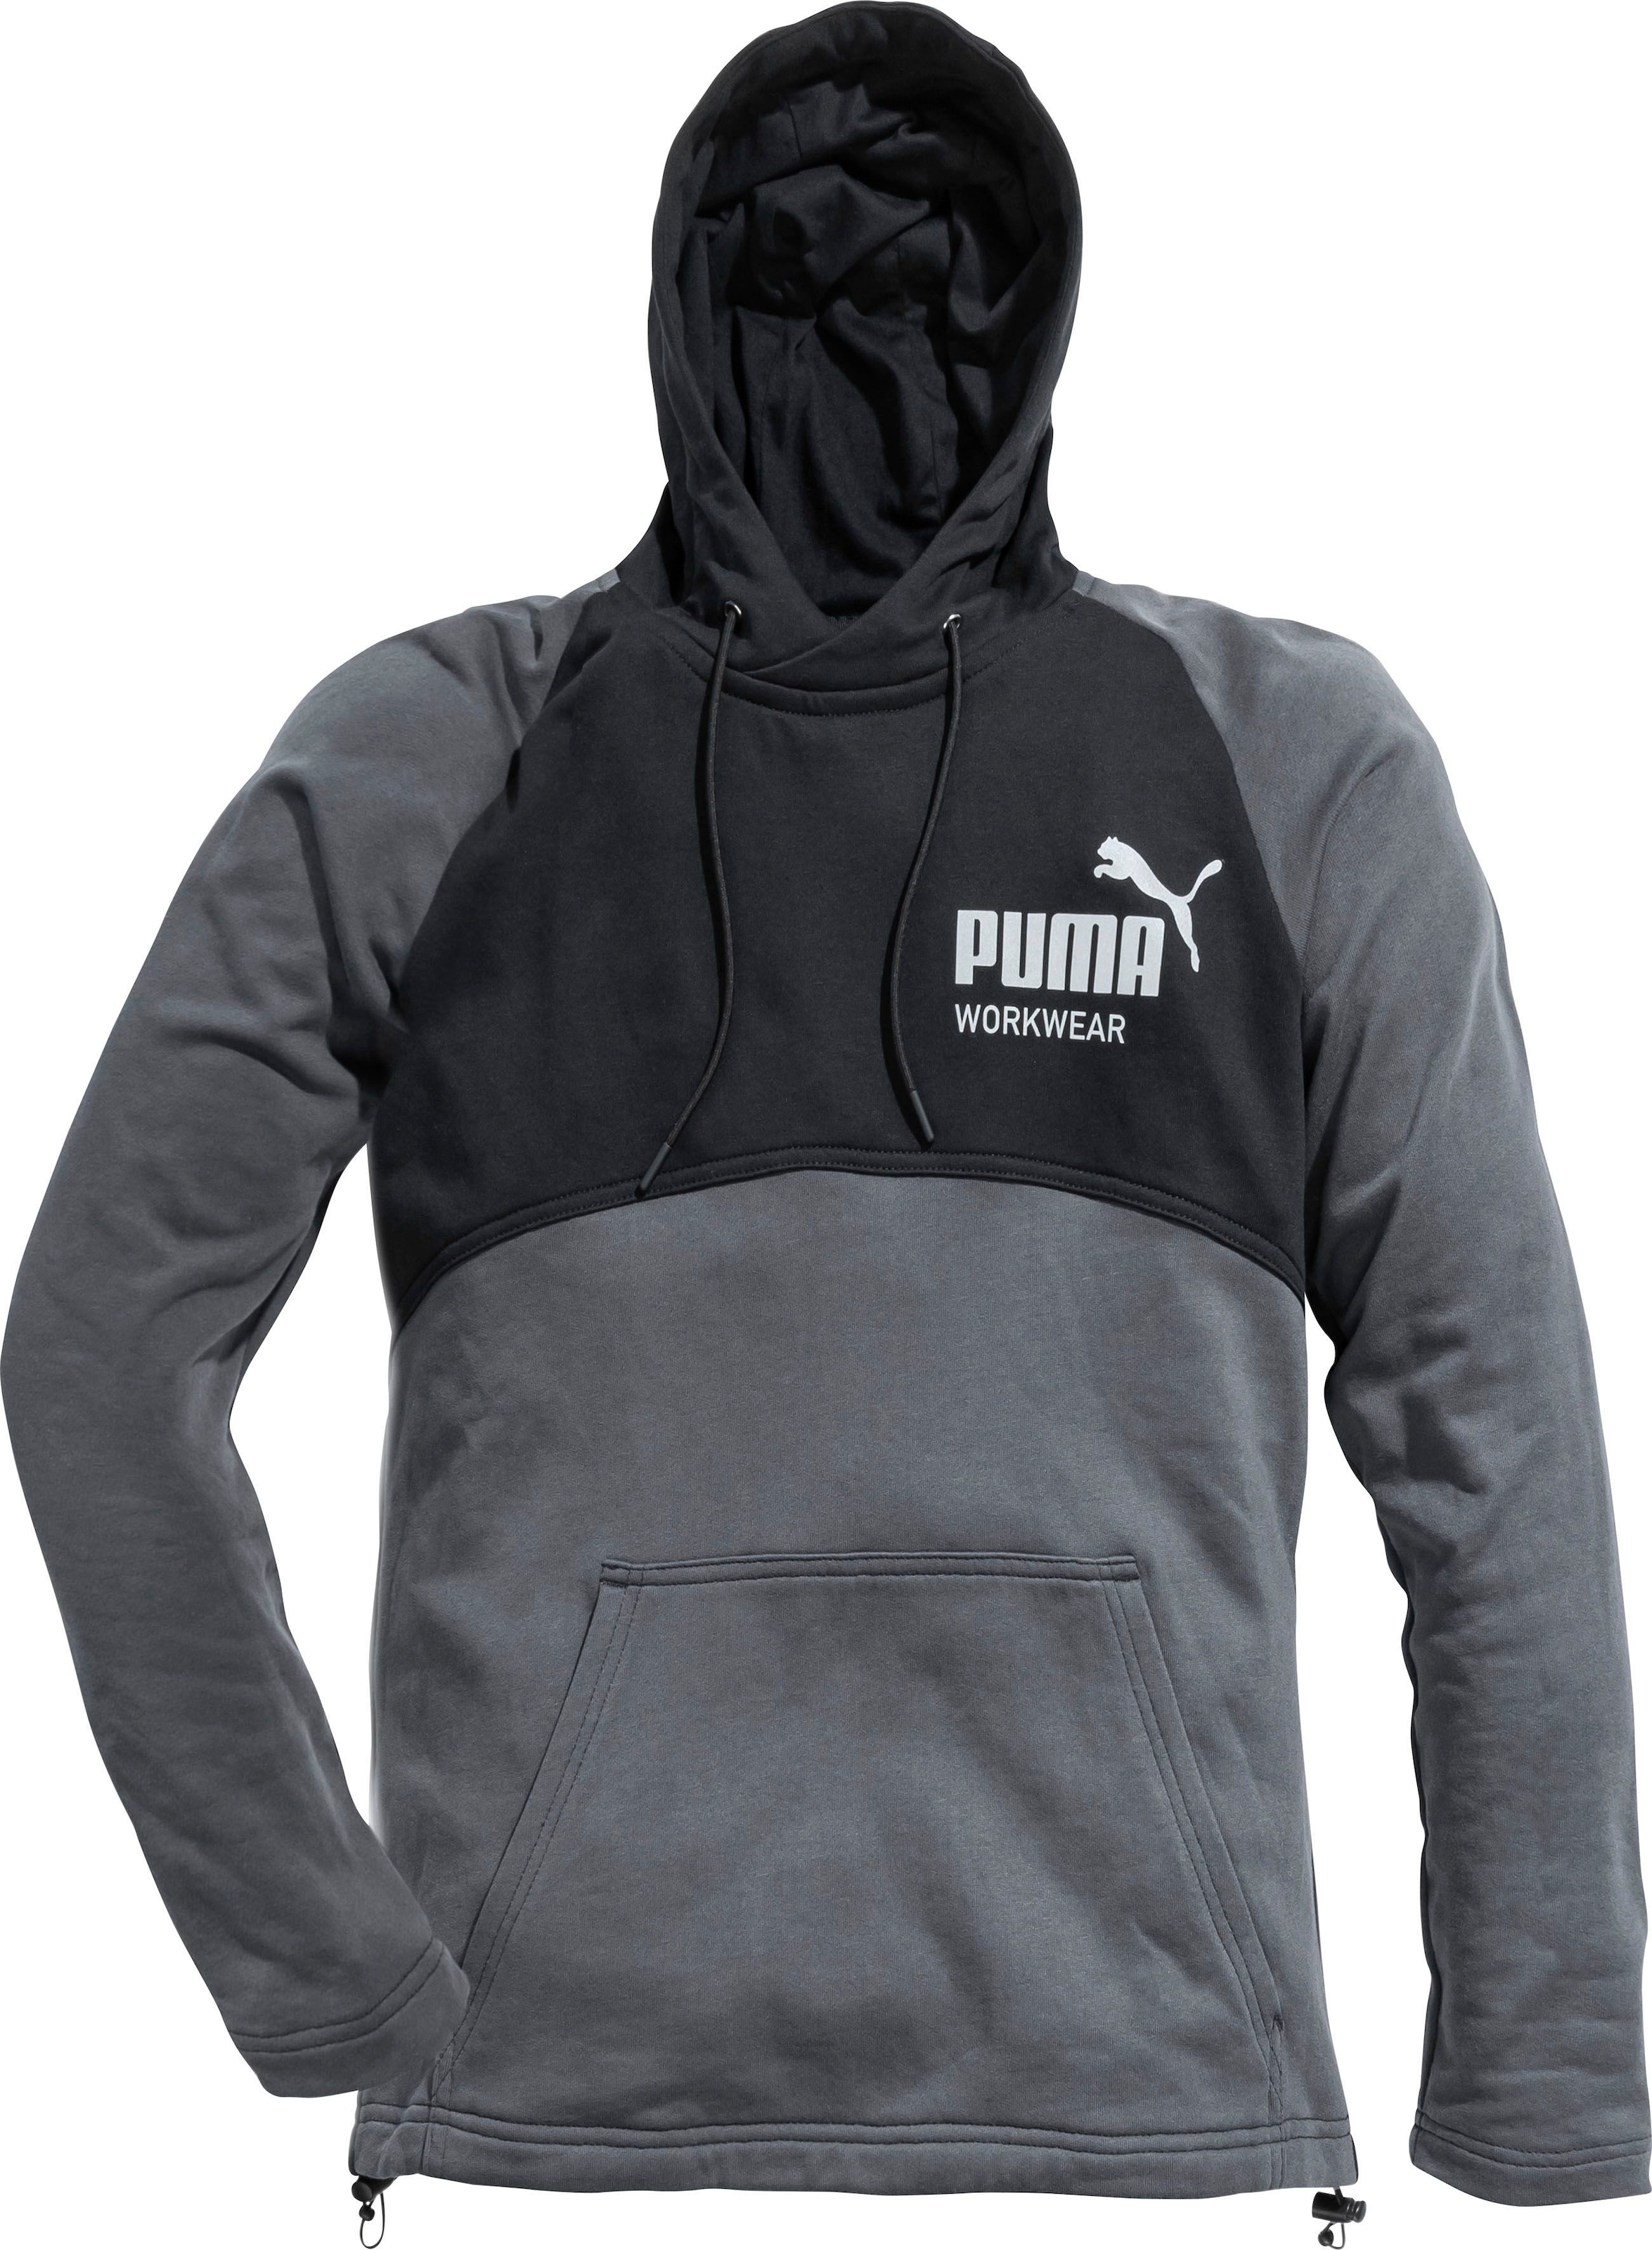 PUMA Workwear Hoodie »CHAMP«, gefütterte Kapuze, Kangaroo-Tasche, verstellbarer Saum